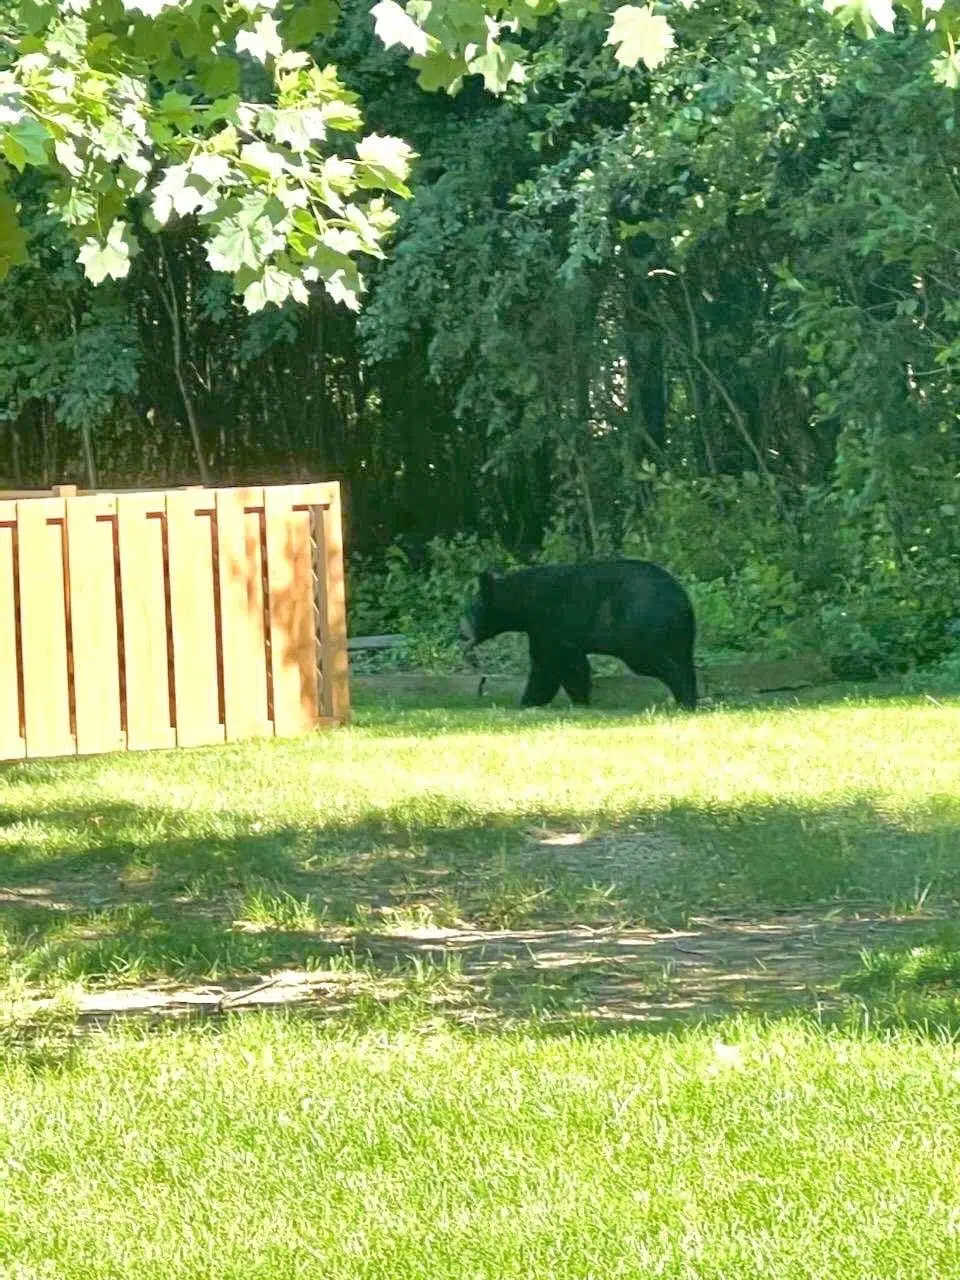 More bear sightings in the area Razor 94.7 104.7 The Cutting Edge